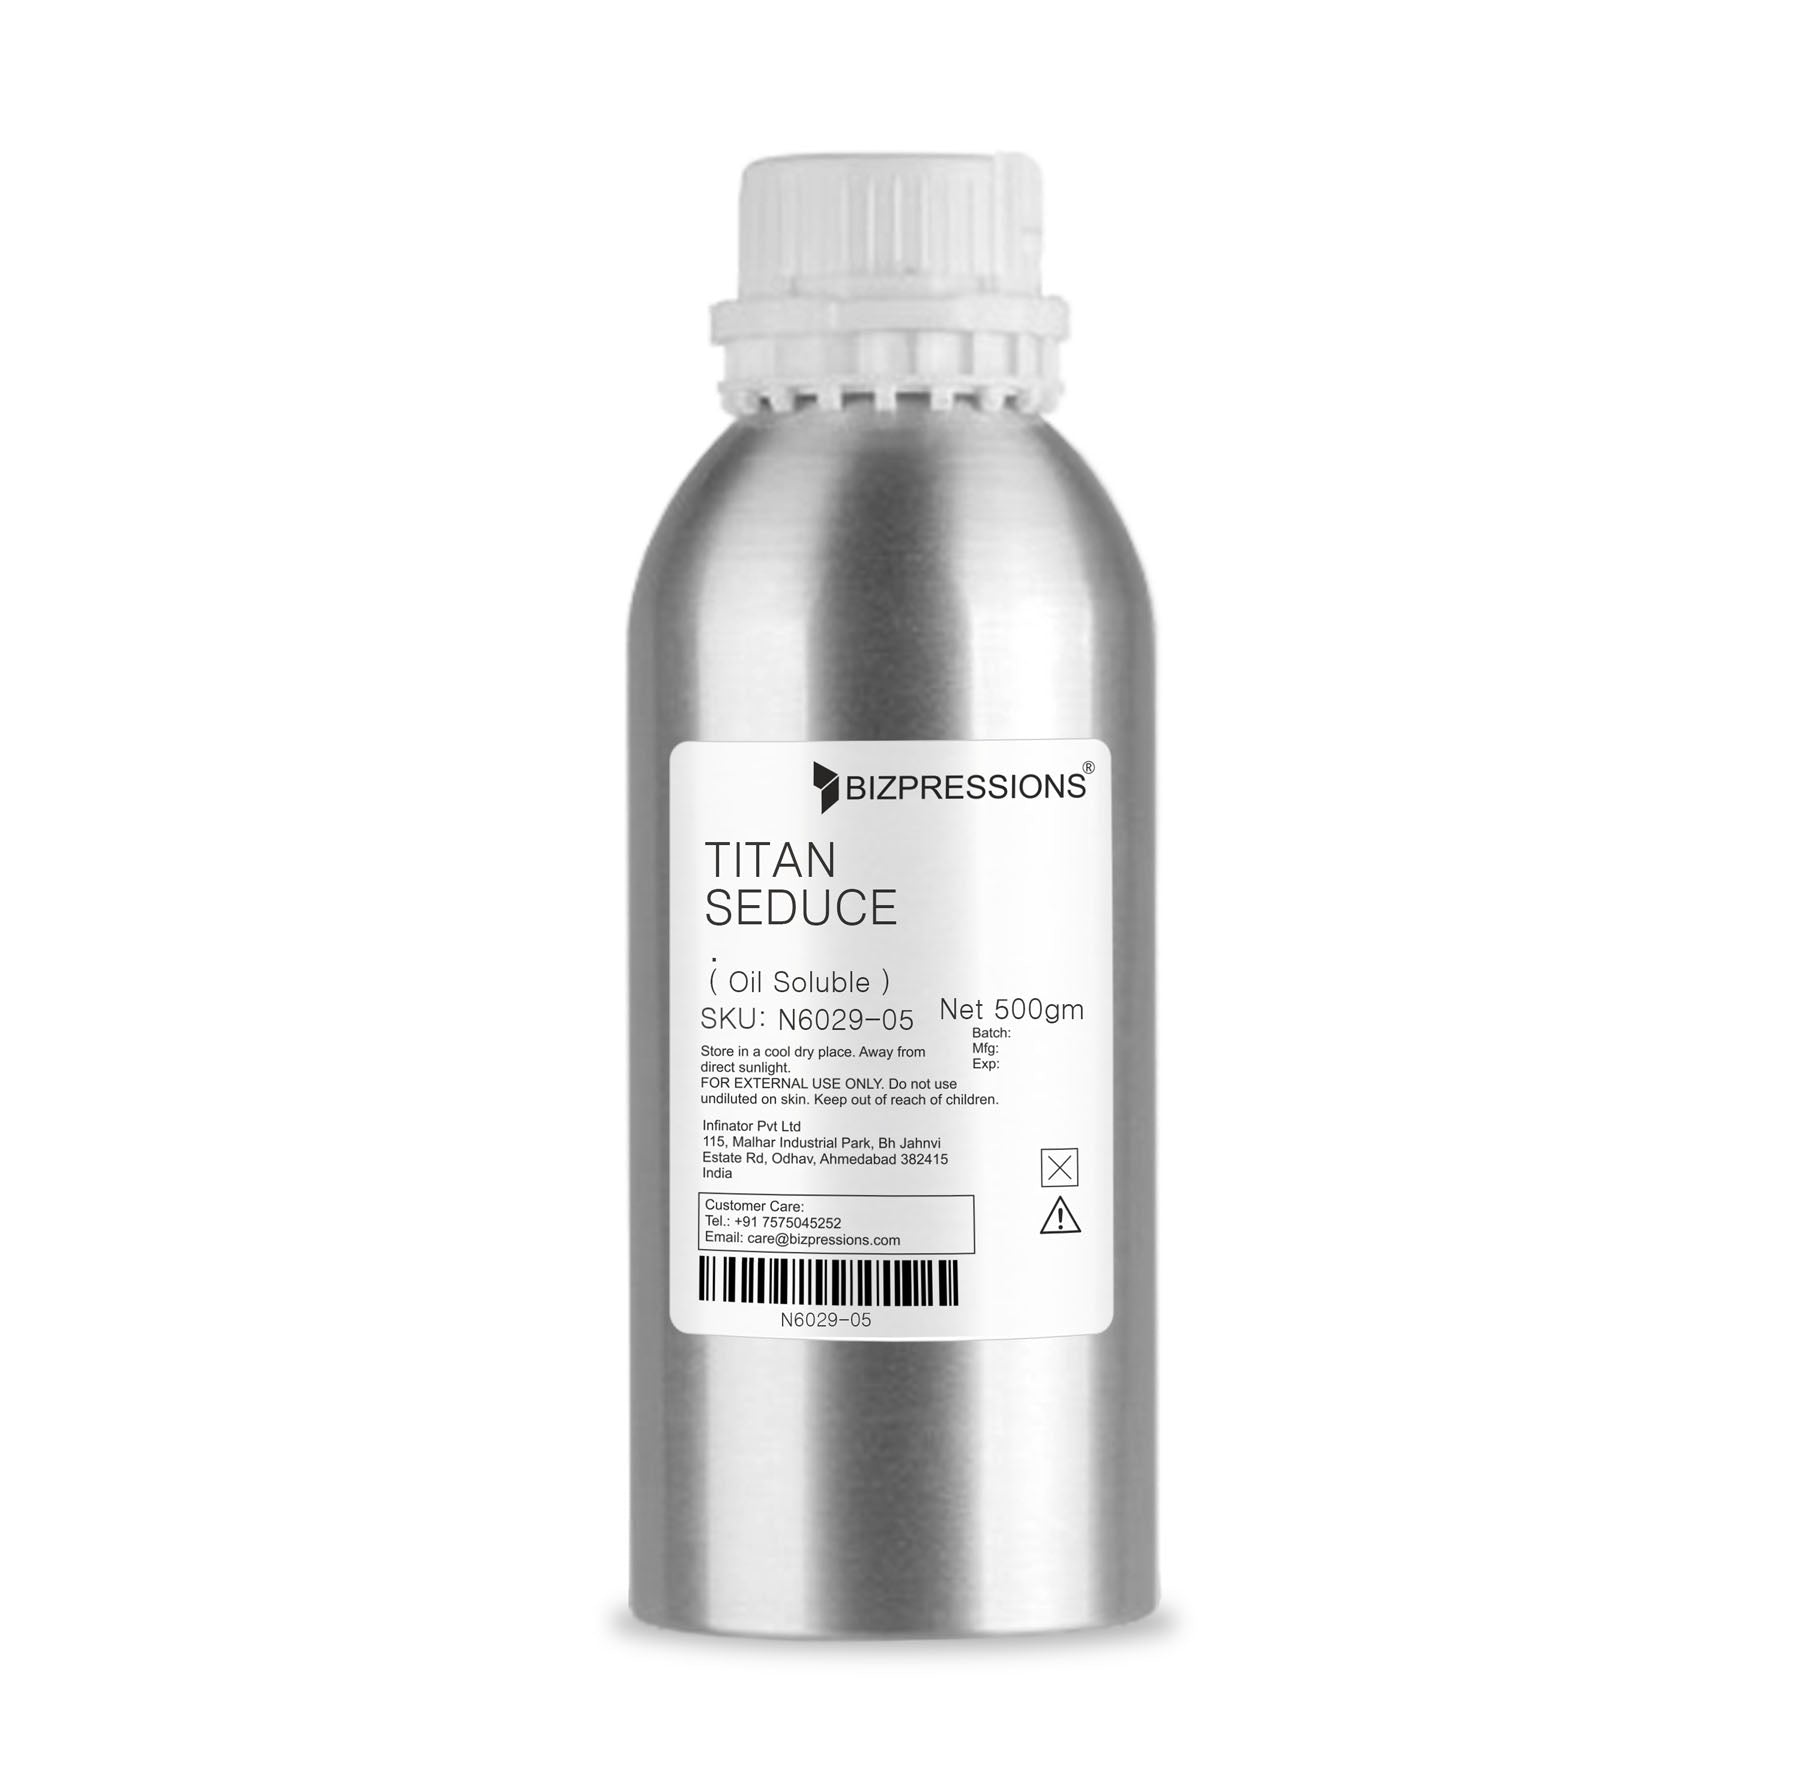 TITAN SEDUCE - Fragrance ( Oil Soluble ) - 500 gm